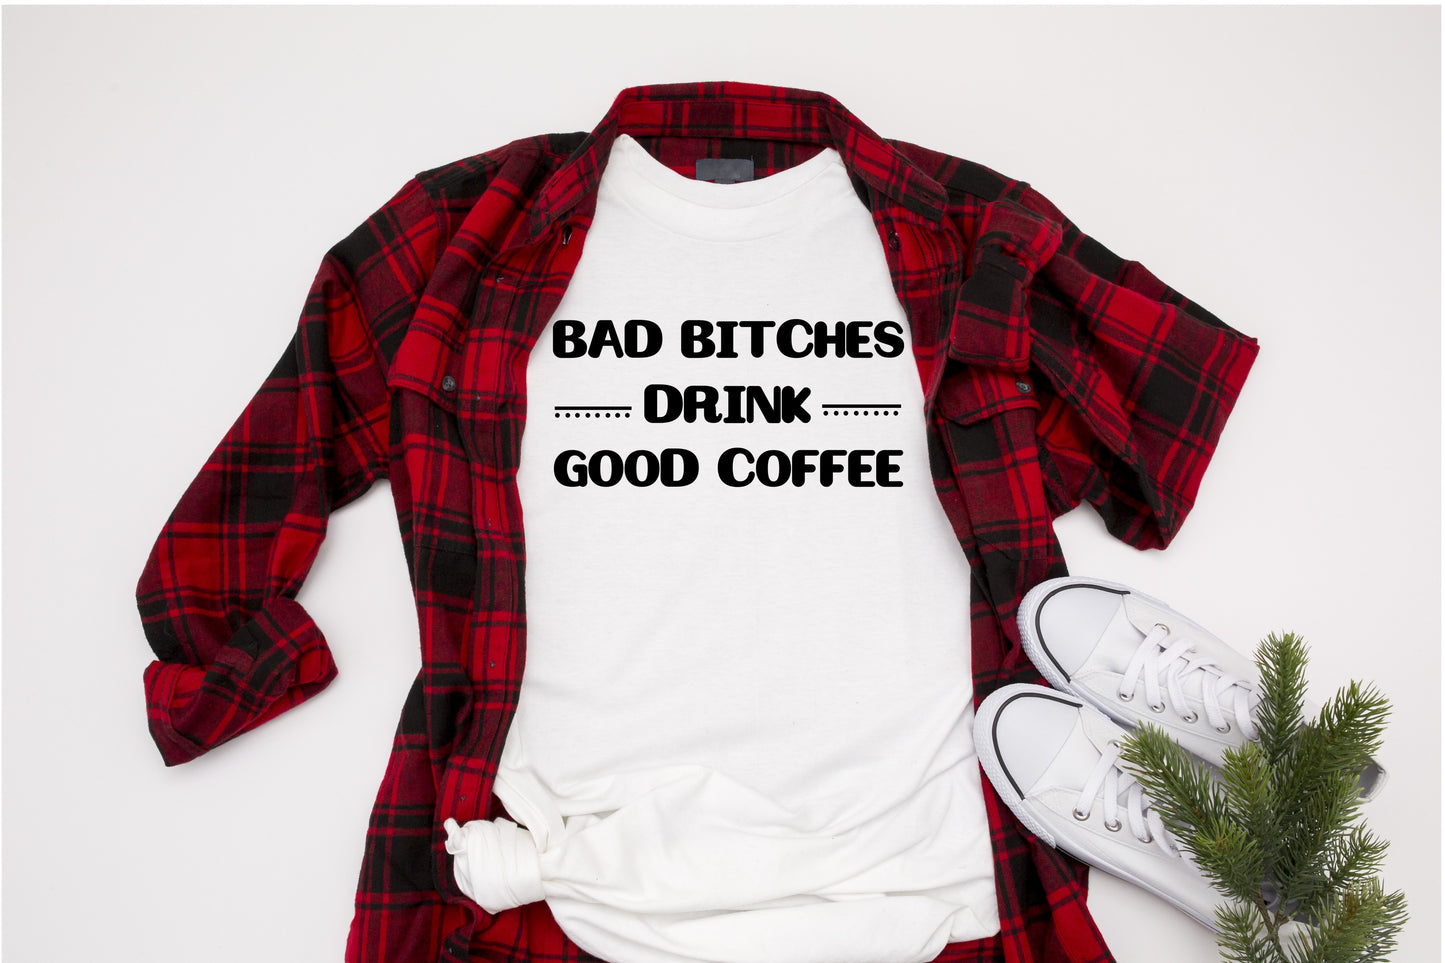 Fun, custom "Bad Bitches Drink Good Coffee" T-shirt